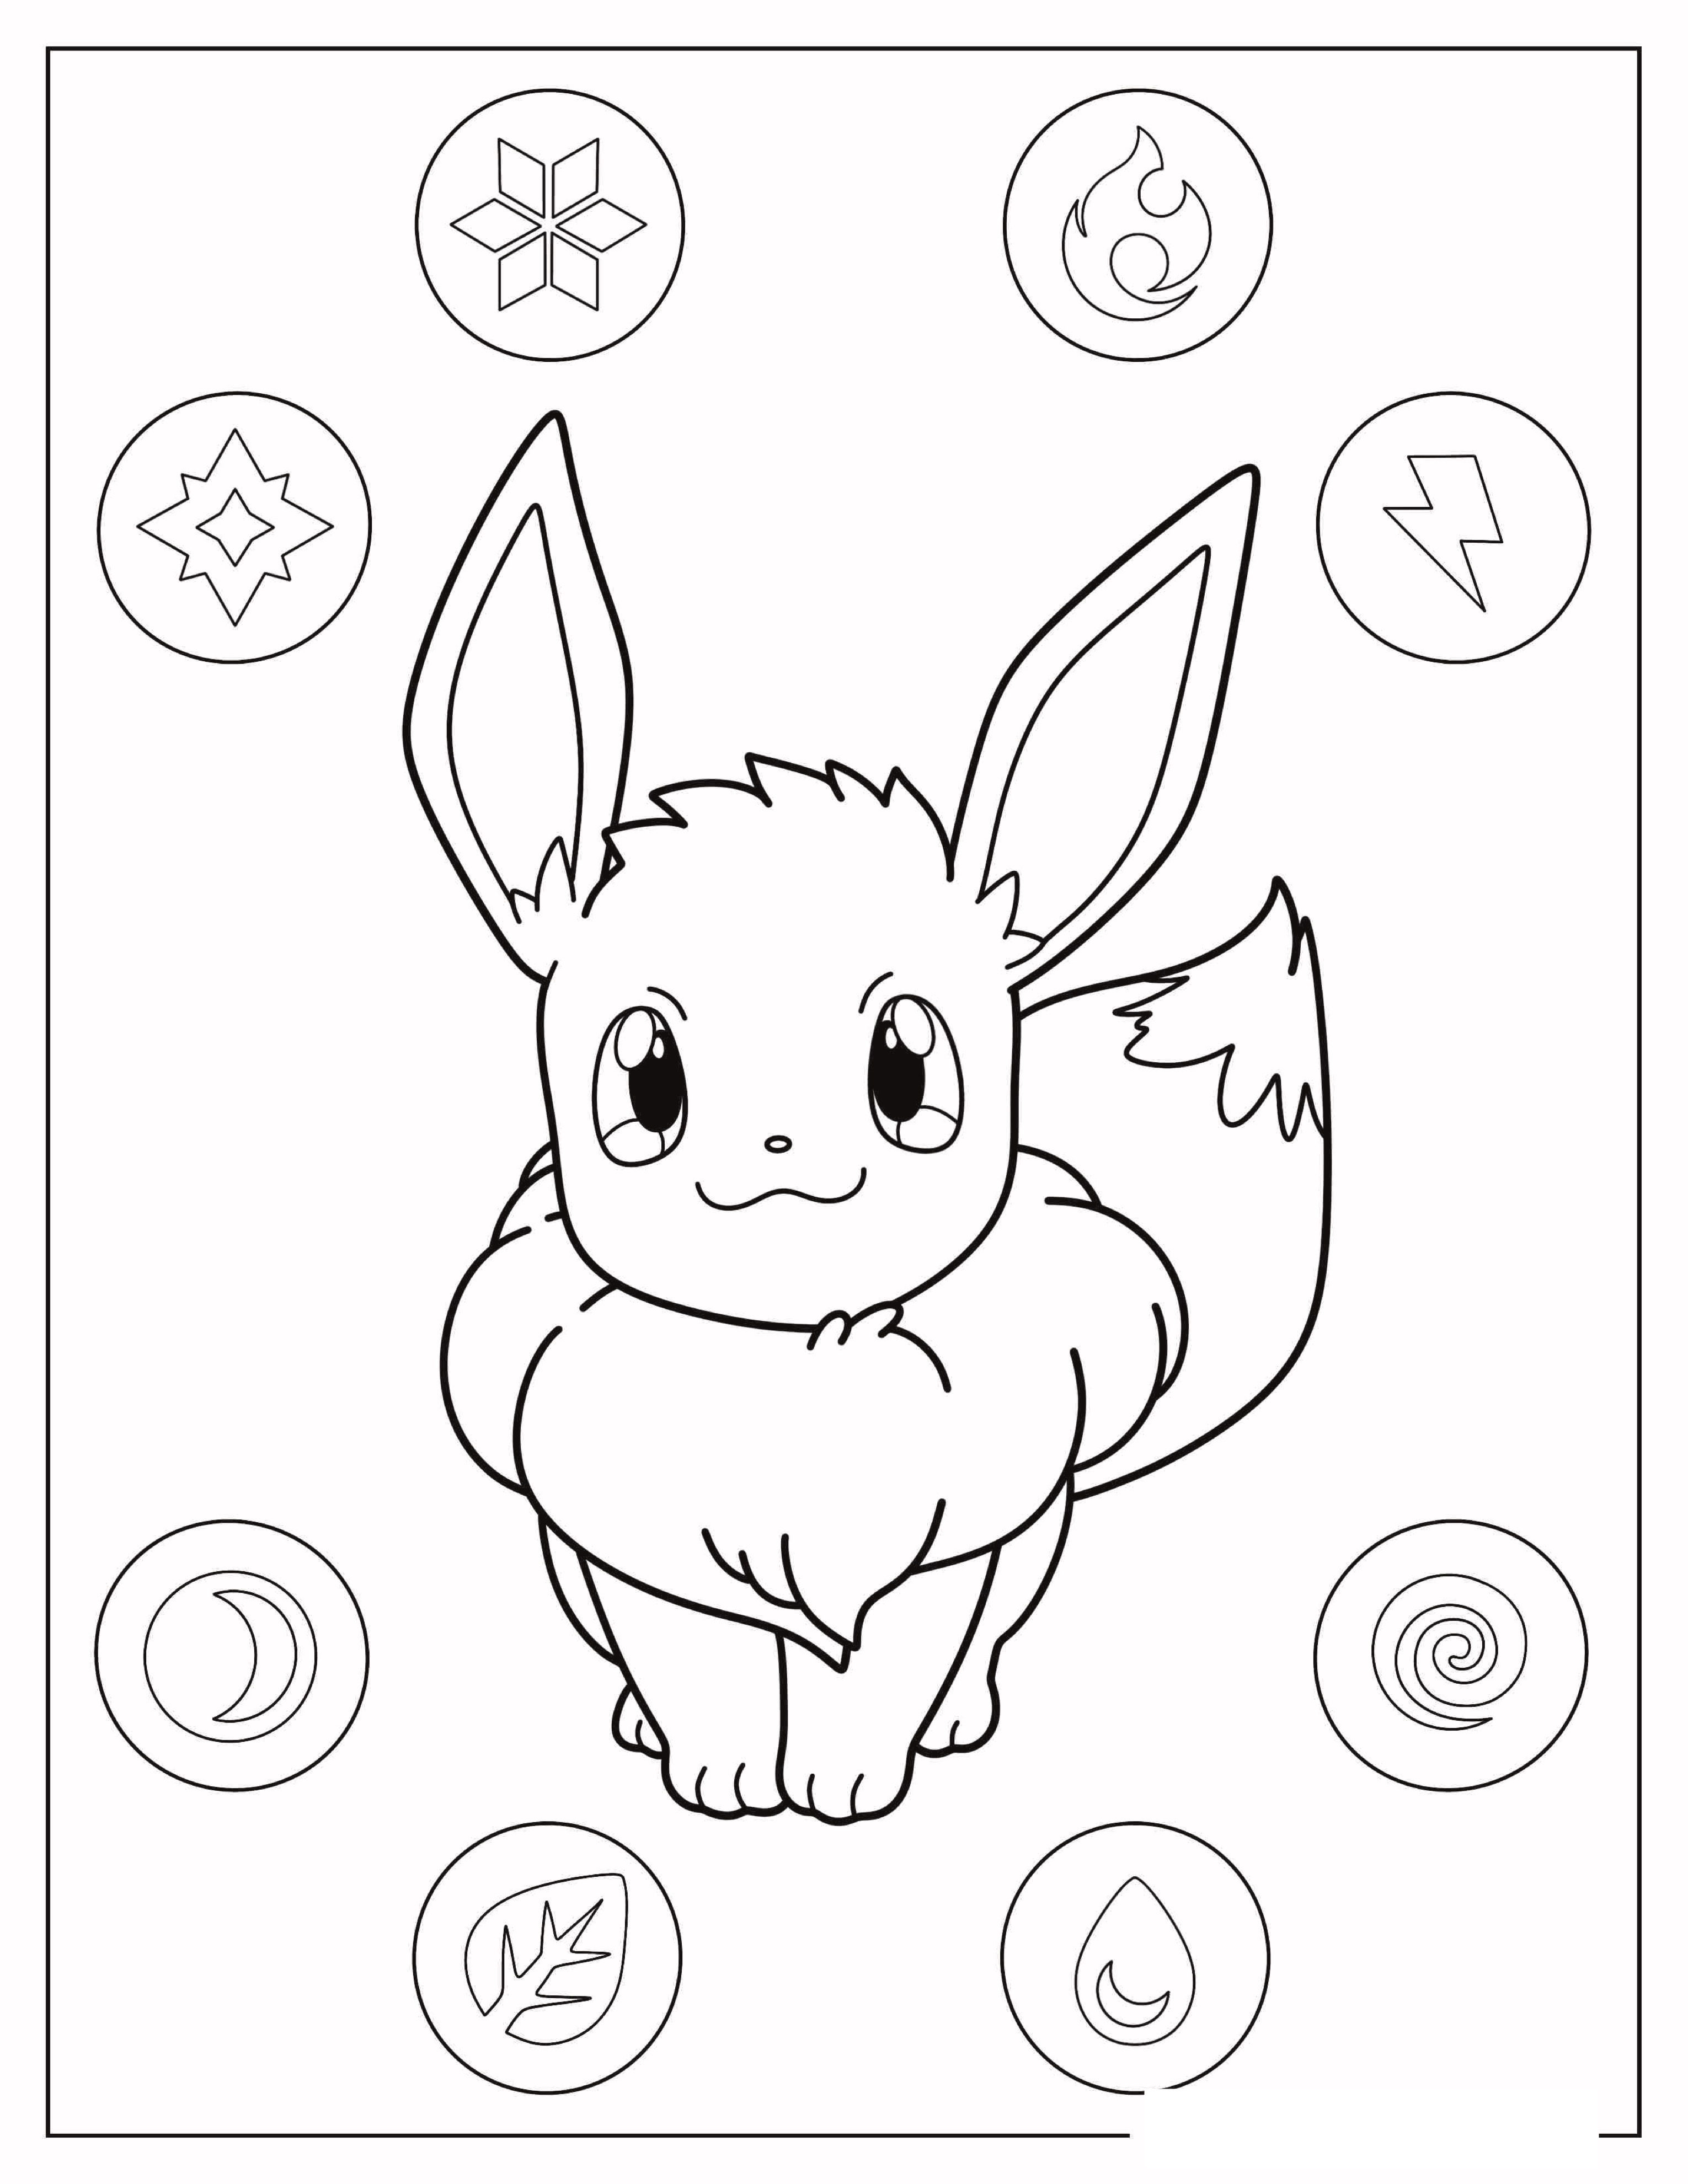 Eevee-Pokemon-With-Badges.jpg